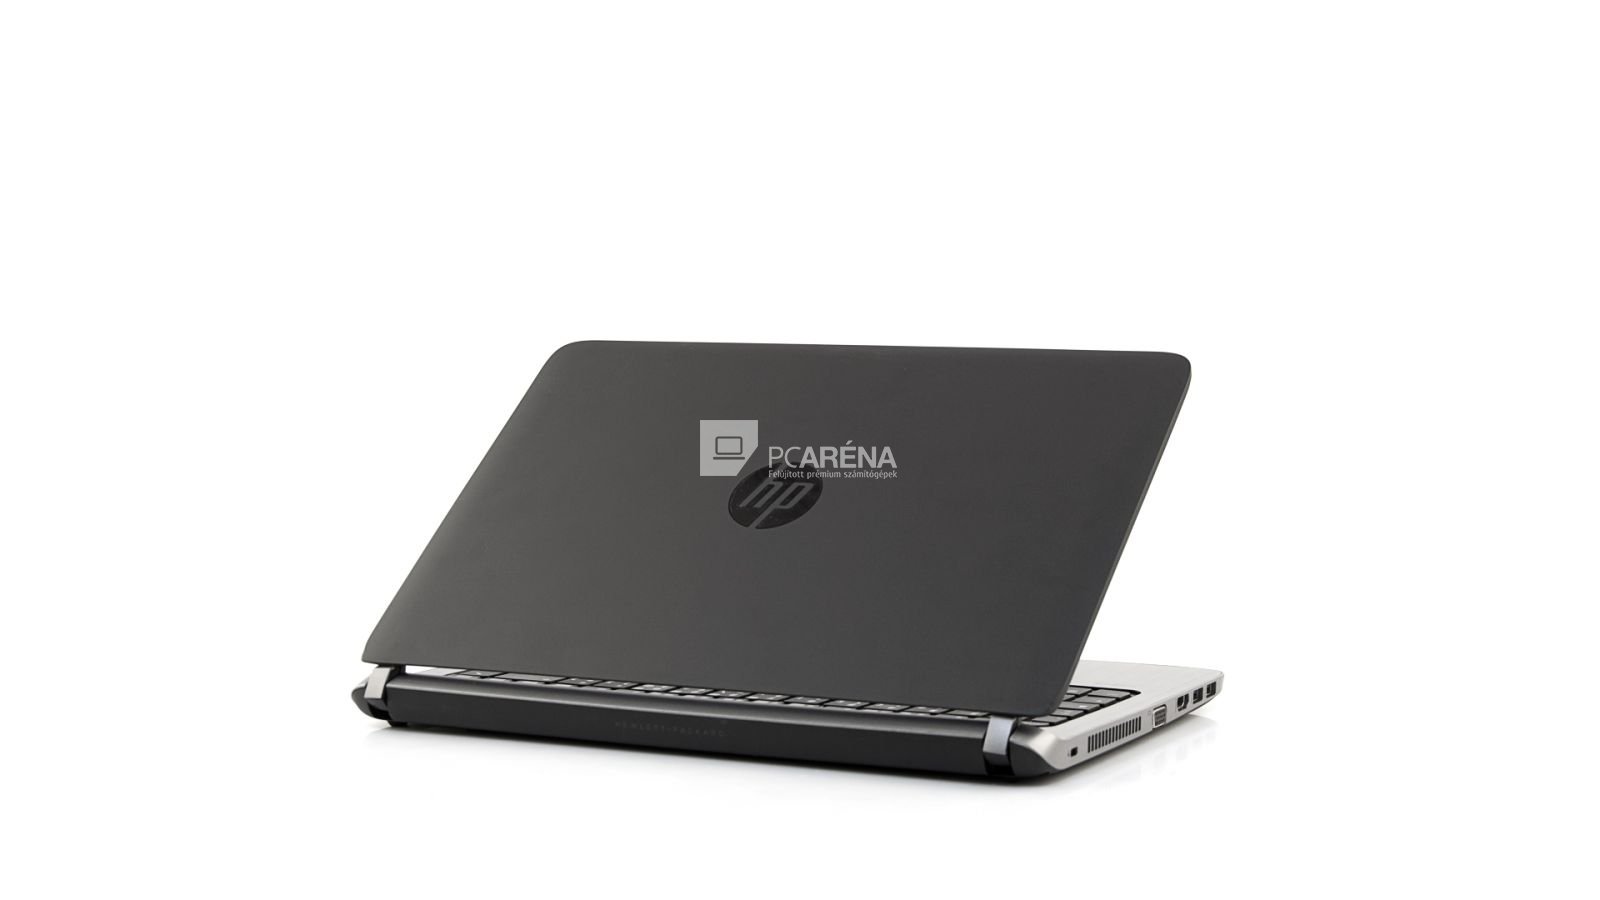 HP Probook 430 G2 laptop